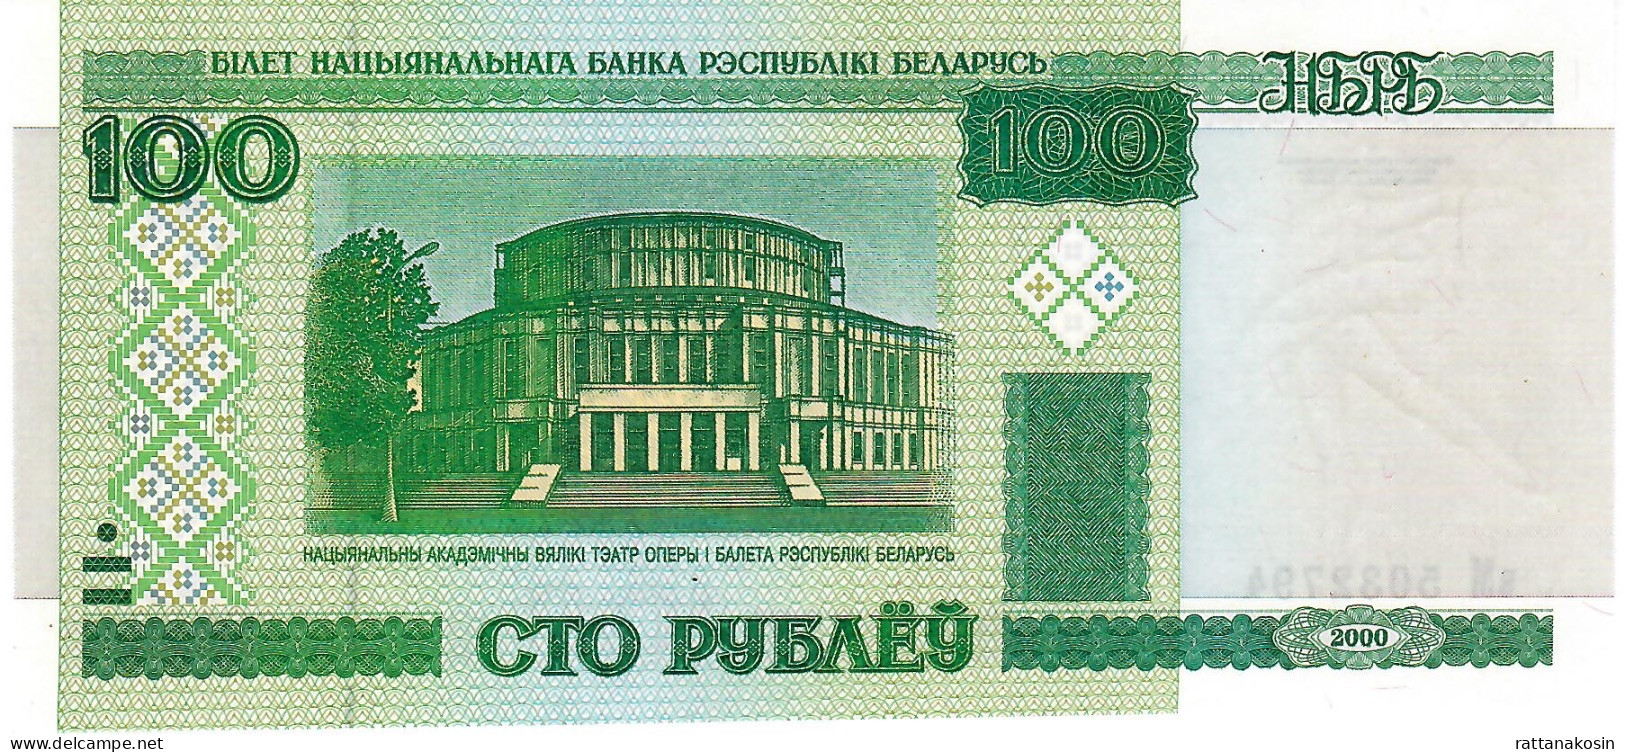 BELARUS  P26 100 RUBLEI 2000   UNC. - Belarus